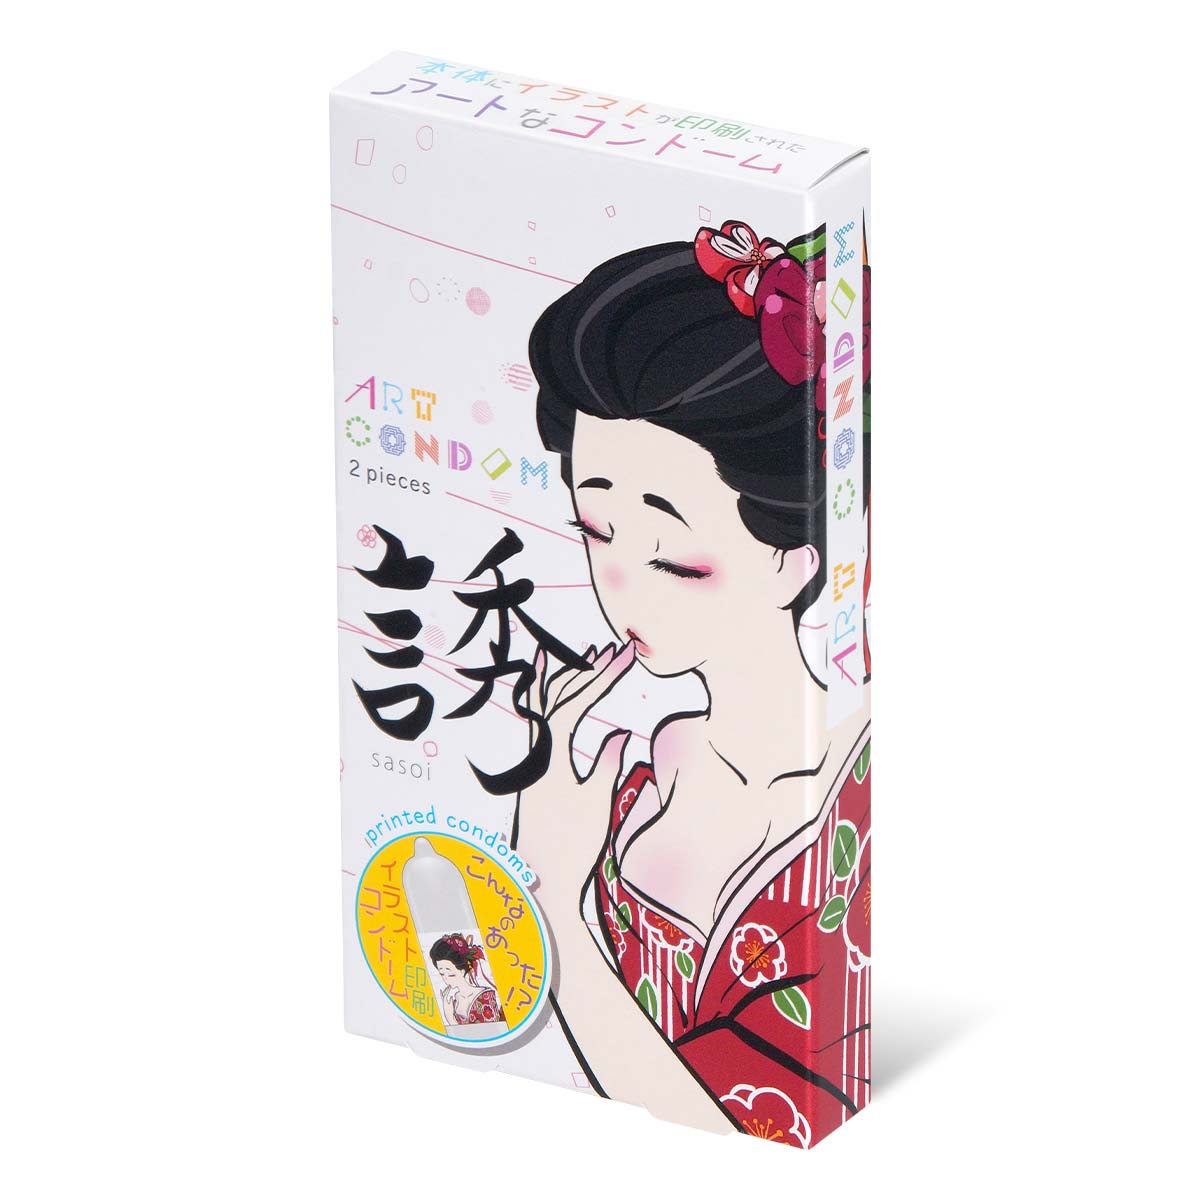 Okamoto SASOI Art Condom (Japan Edition) 2 pieces Latex Condom-p_1